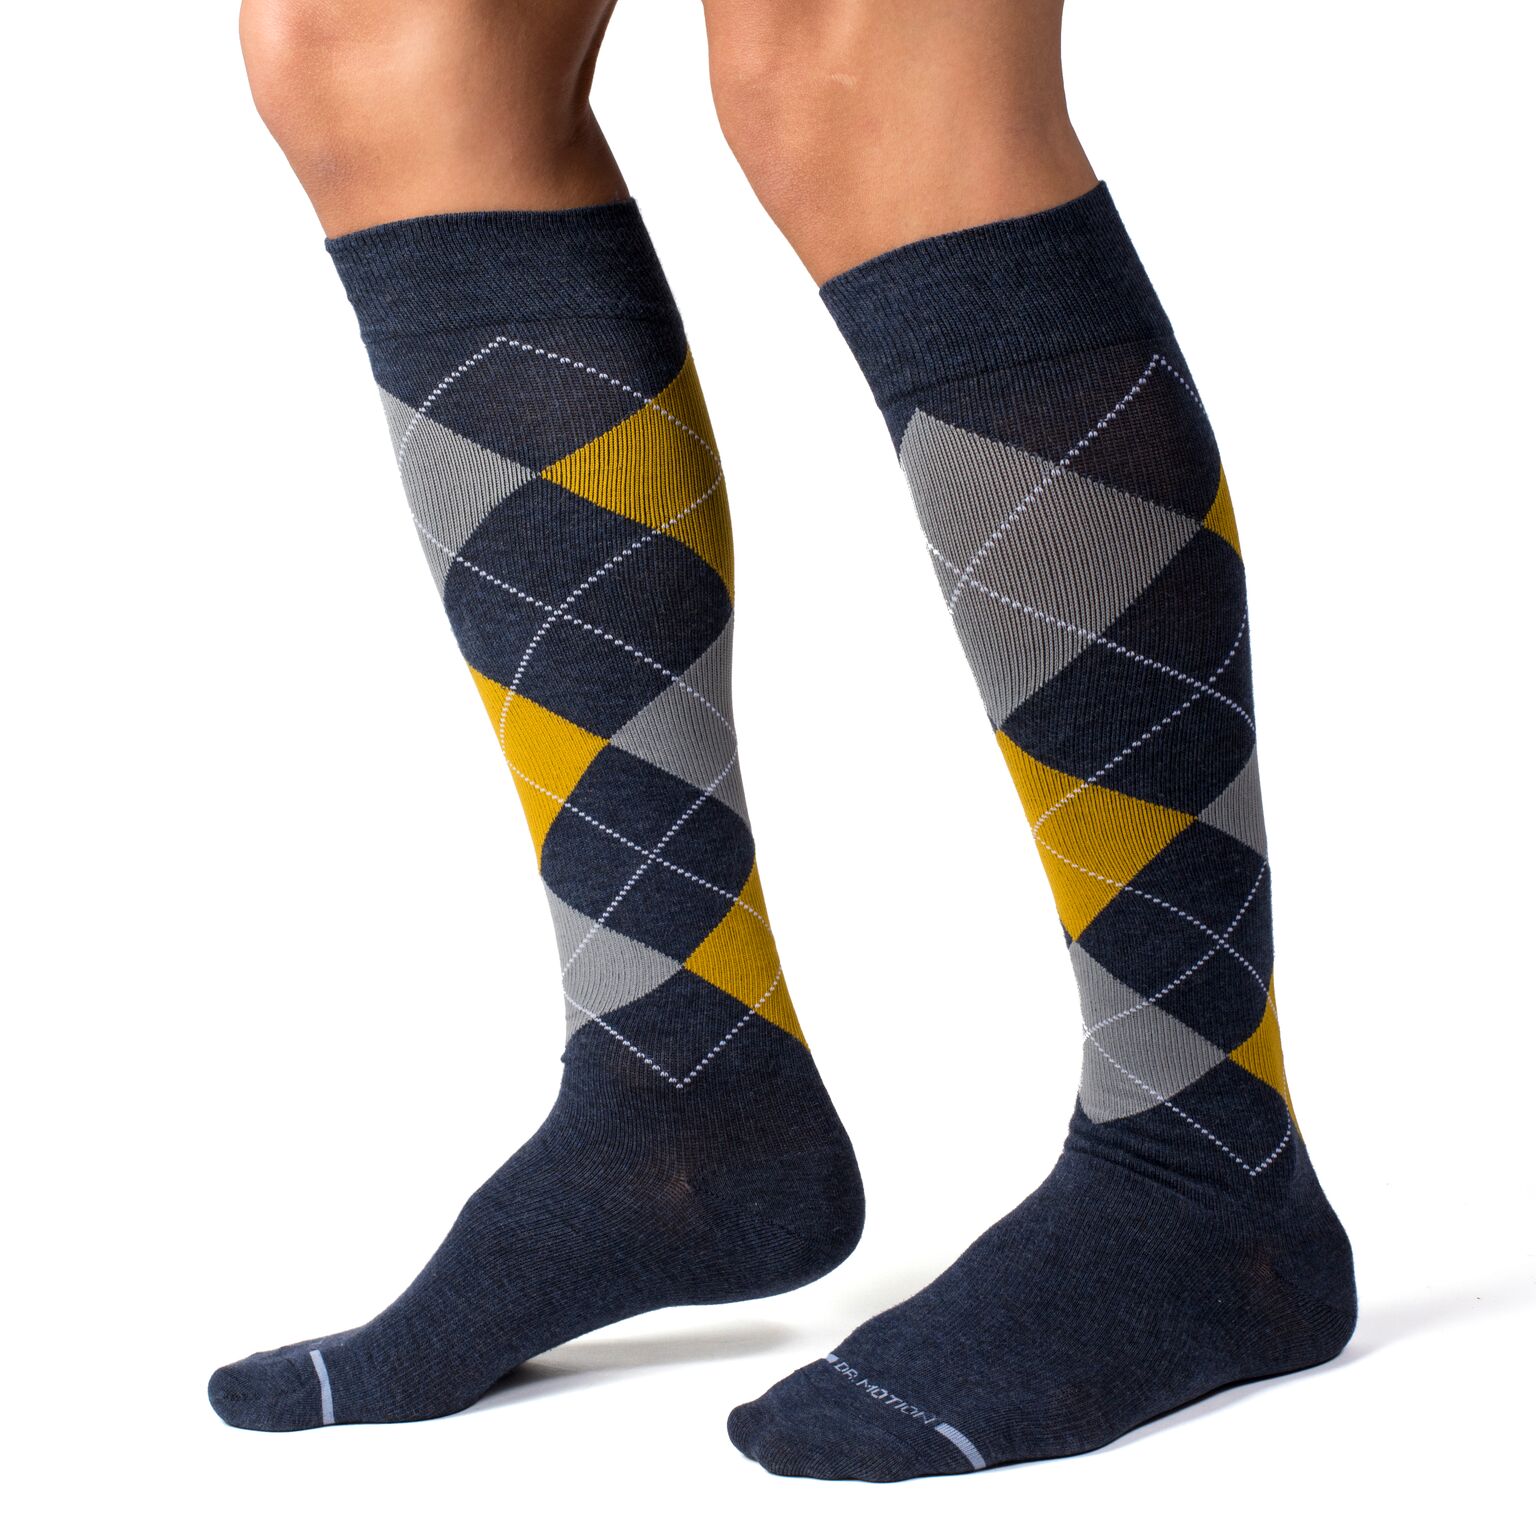 compression socks for lymphedema